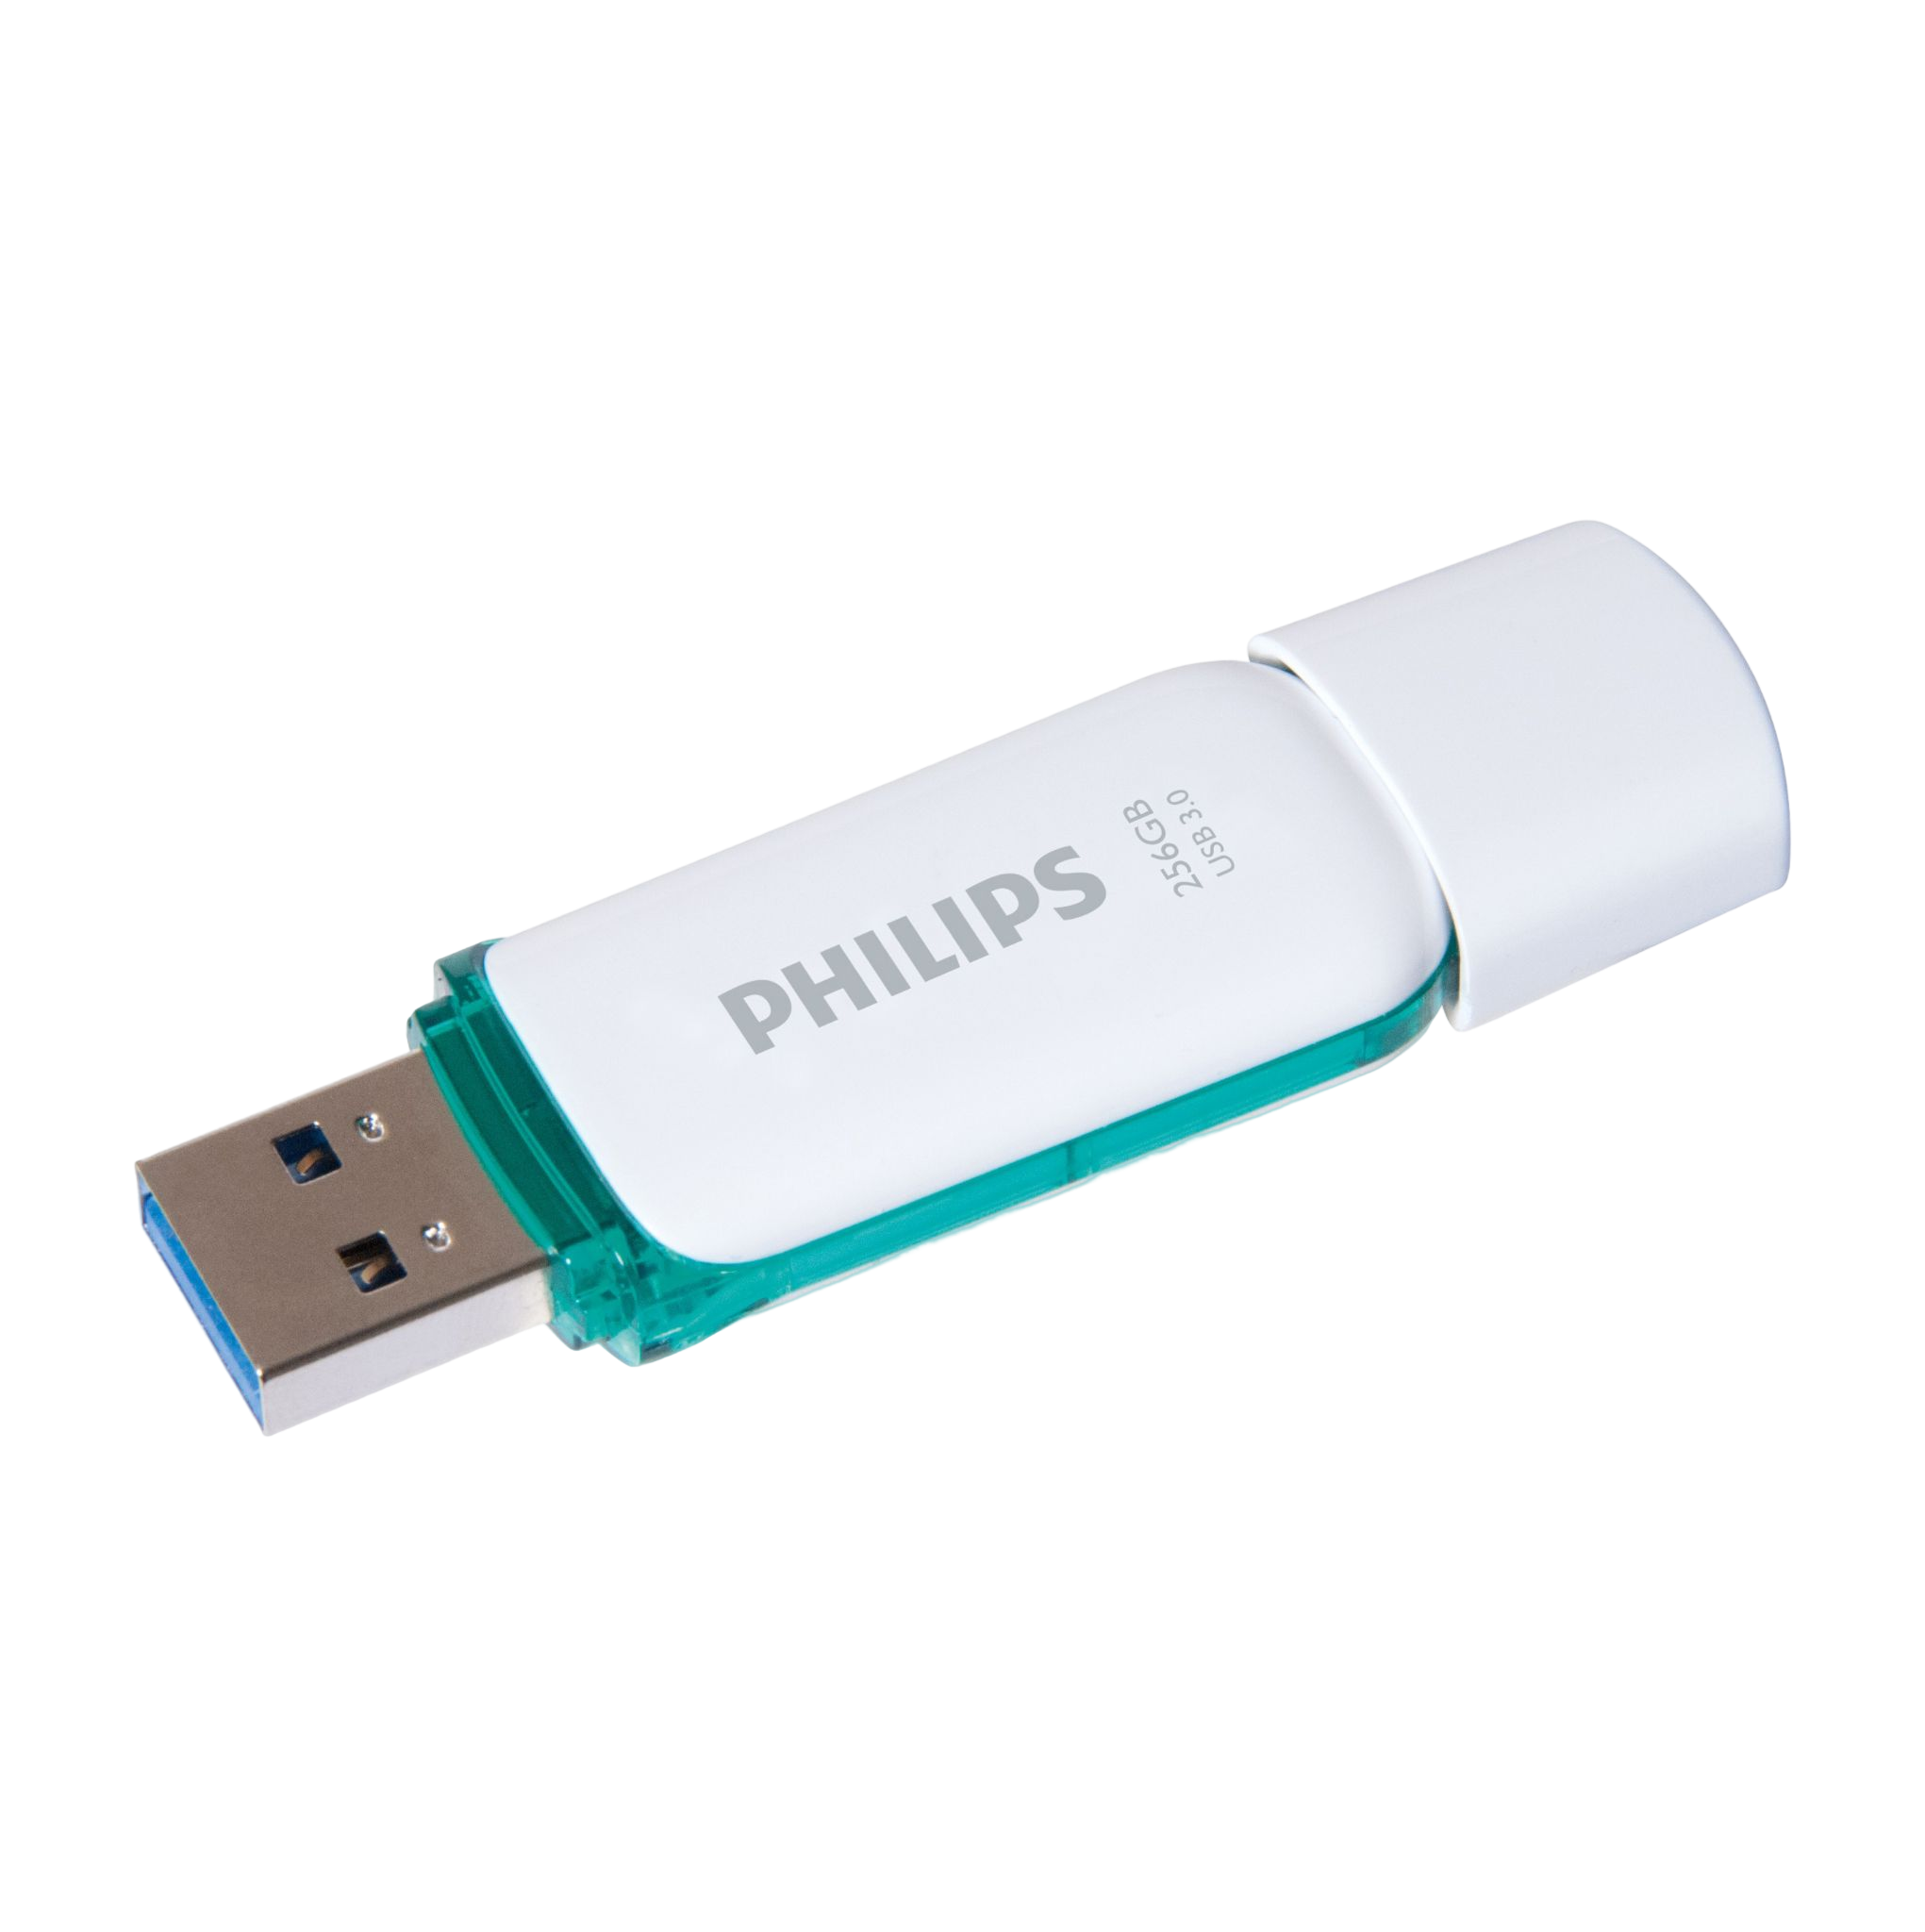 USB-Stick 100 (Weiß, 256 Edition Snow Spring Green®, GB) MB/s PHILIPS